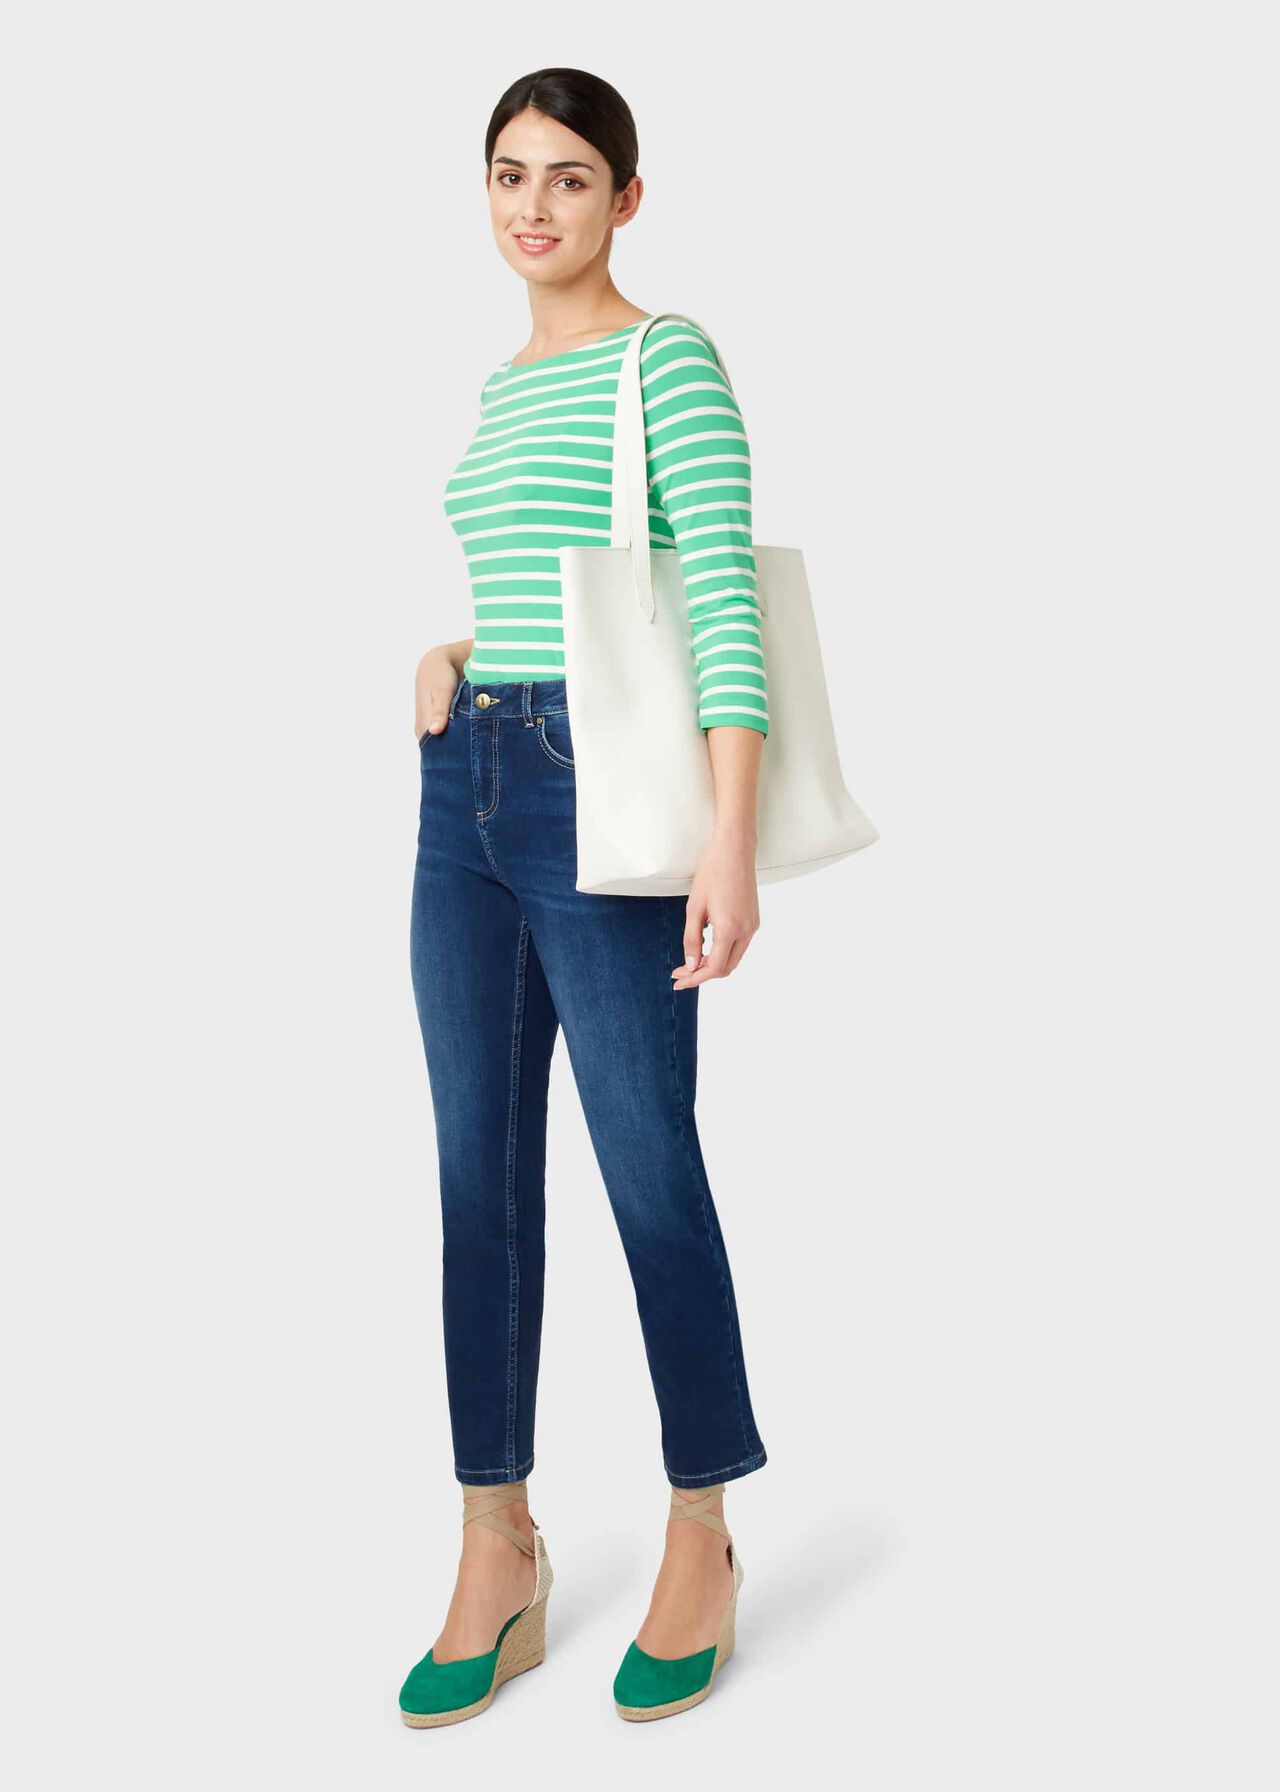 Belle Denim Slim Jeans With Stretch, Mid Wash, hi-res